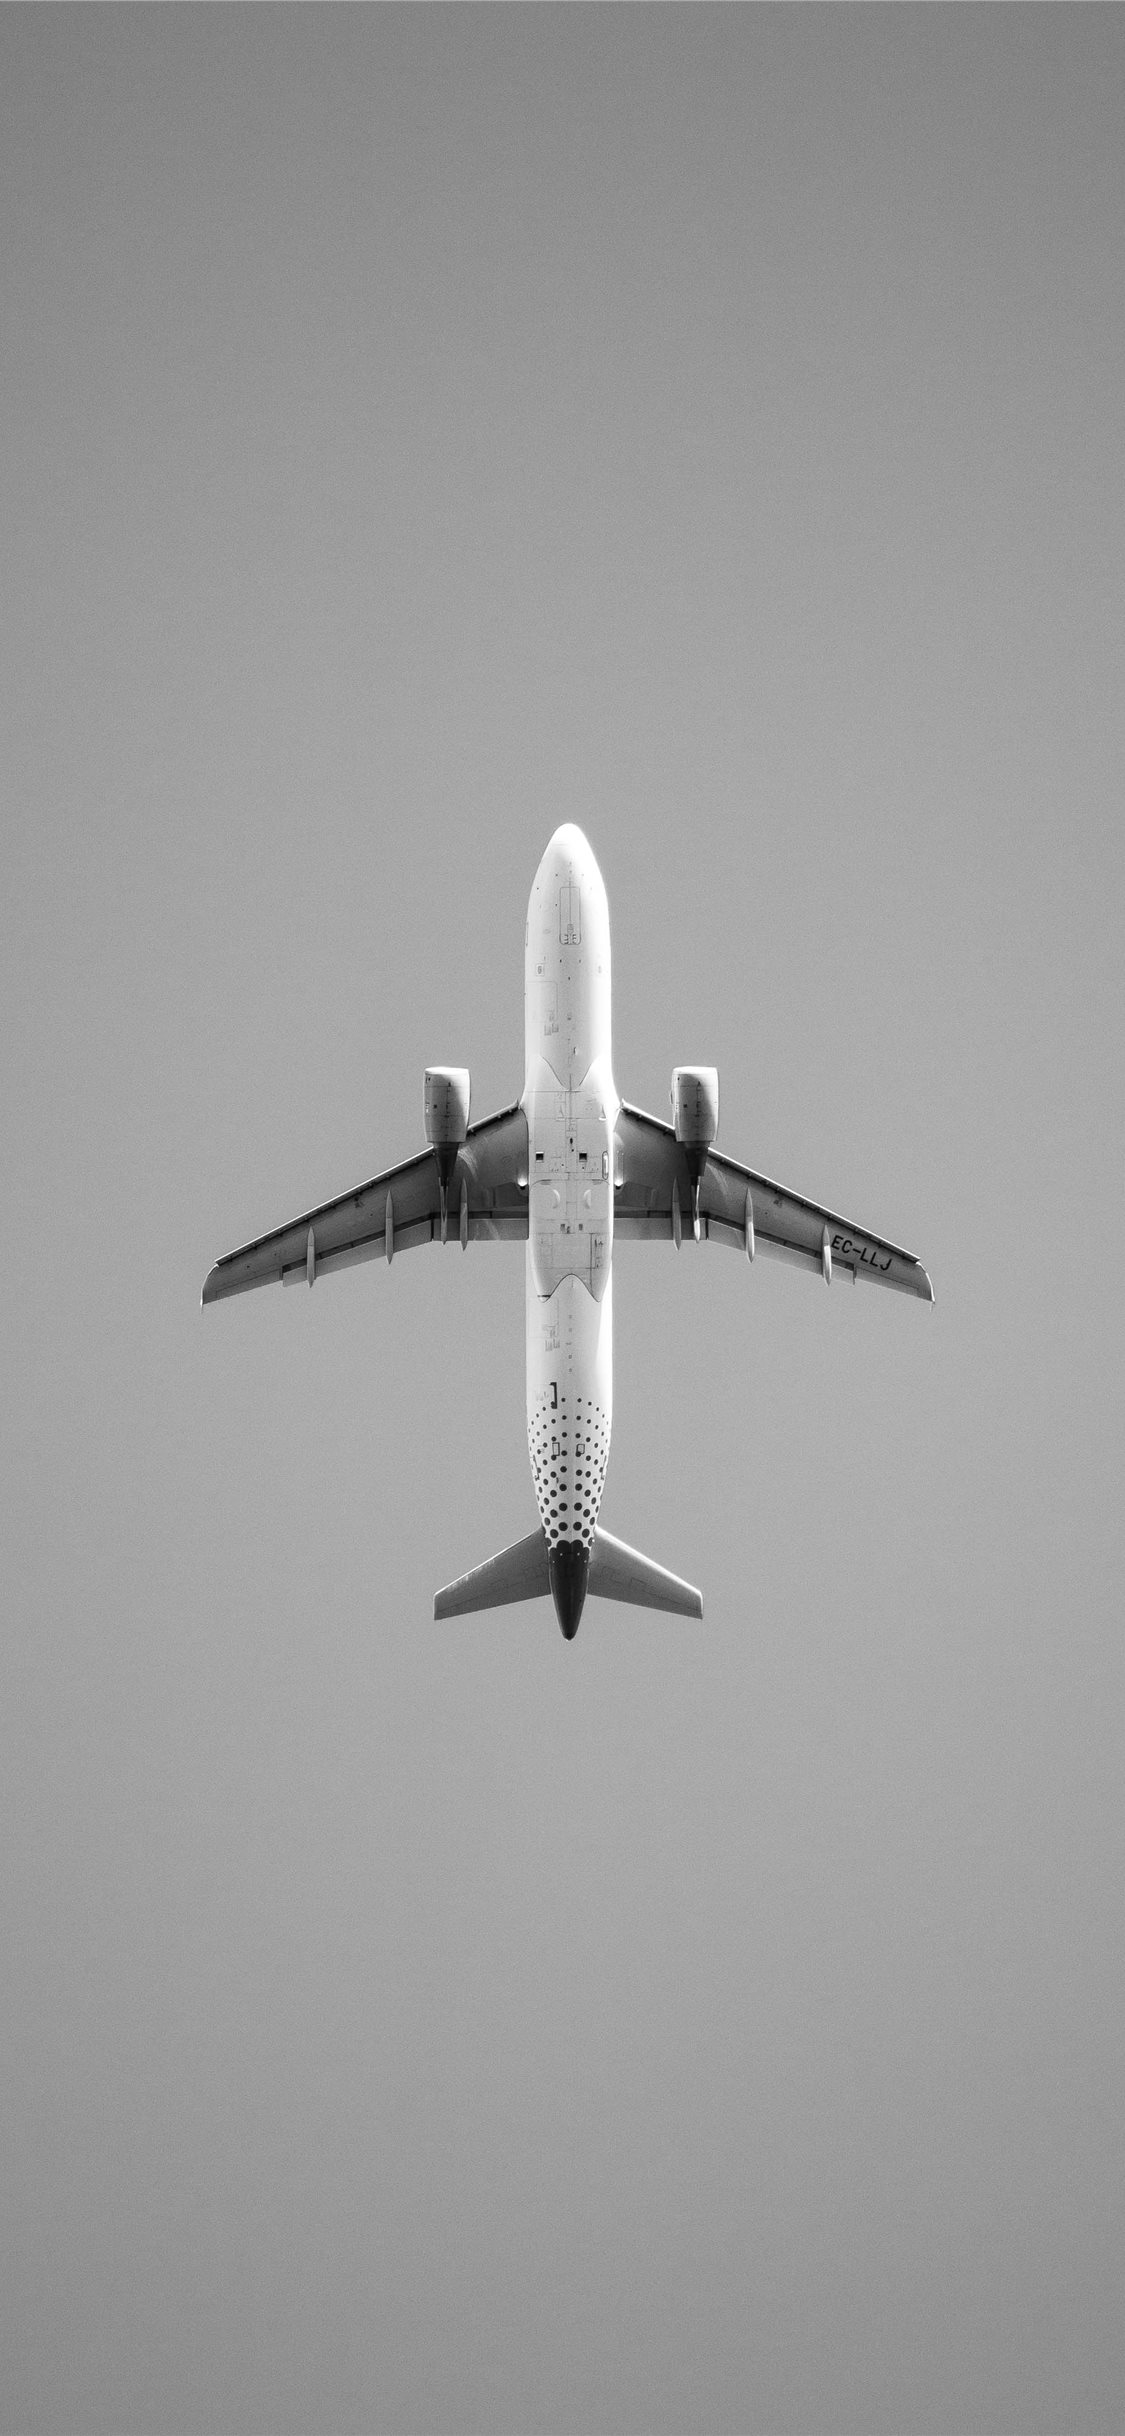 iPhone Xr Wallpaper Airplane